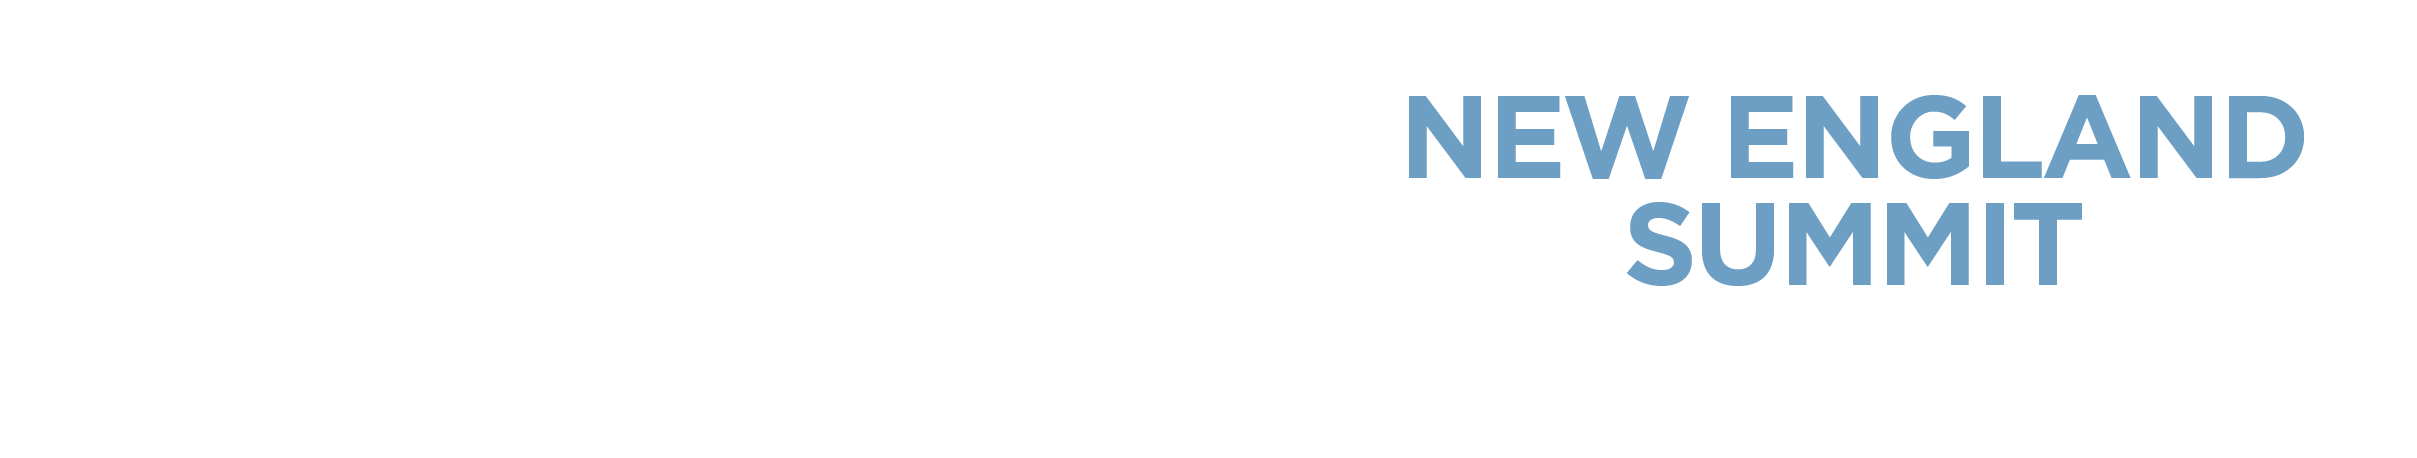 NASPP - New England Summit - Reverse Logo